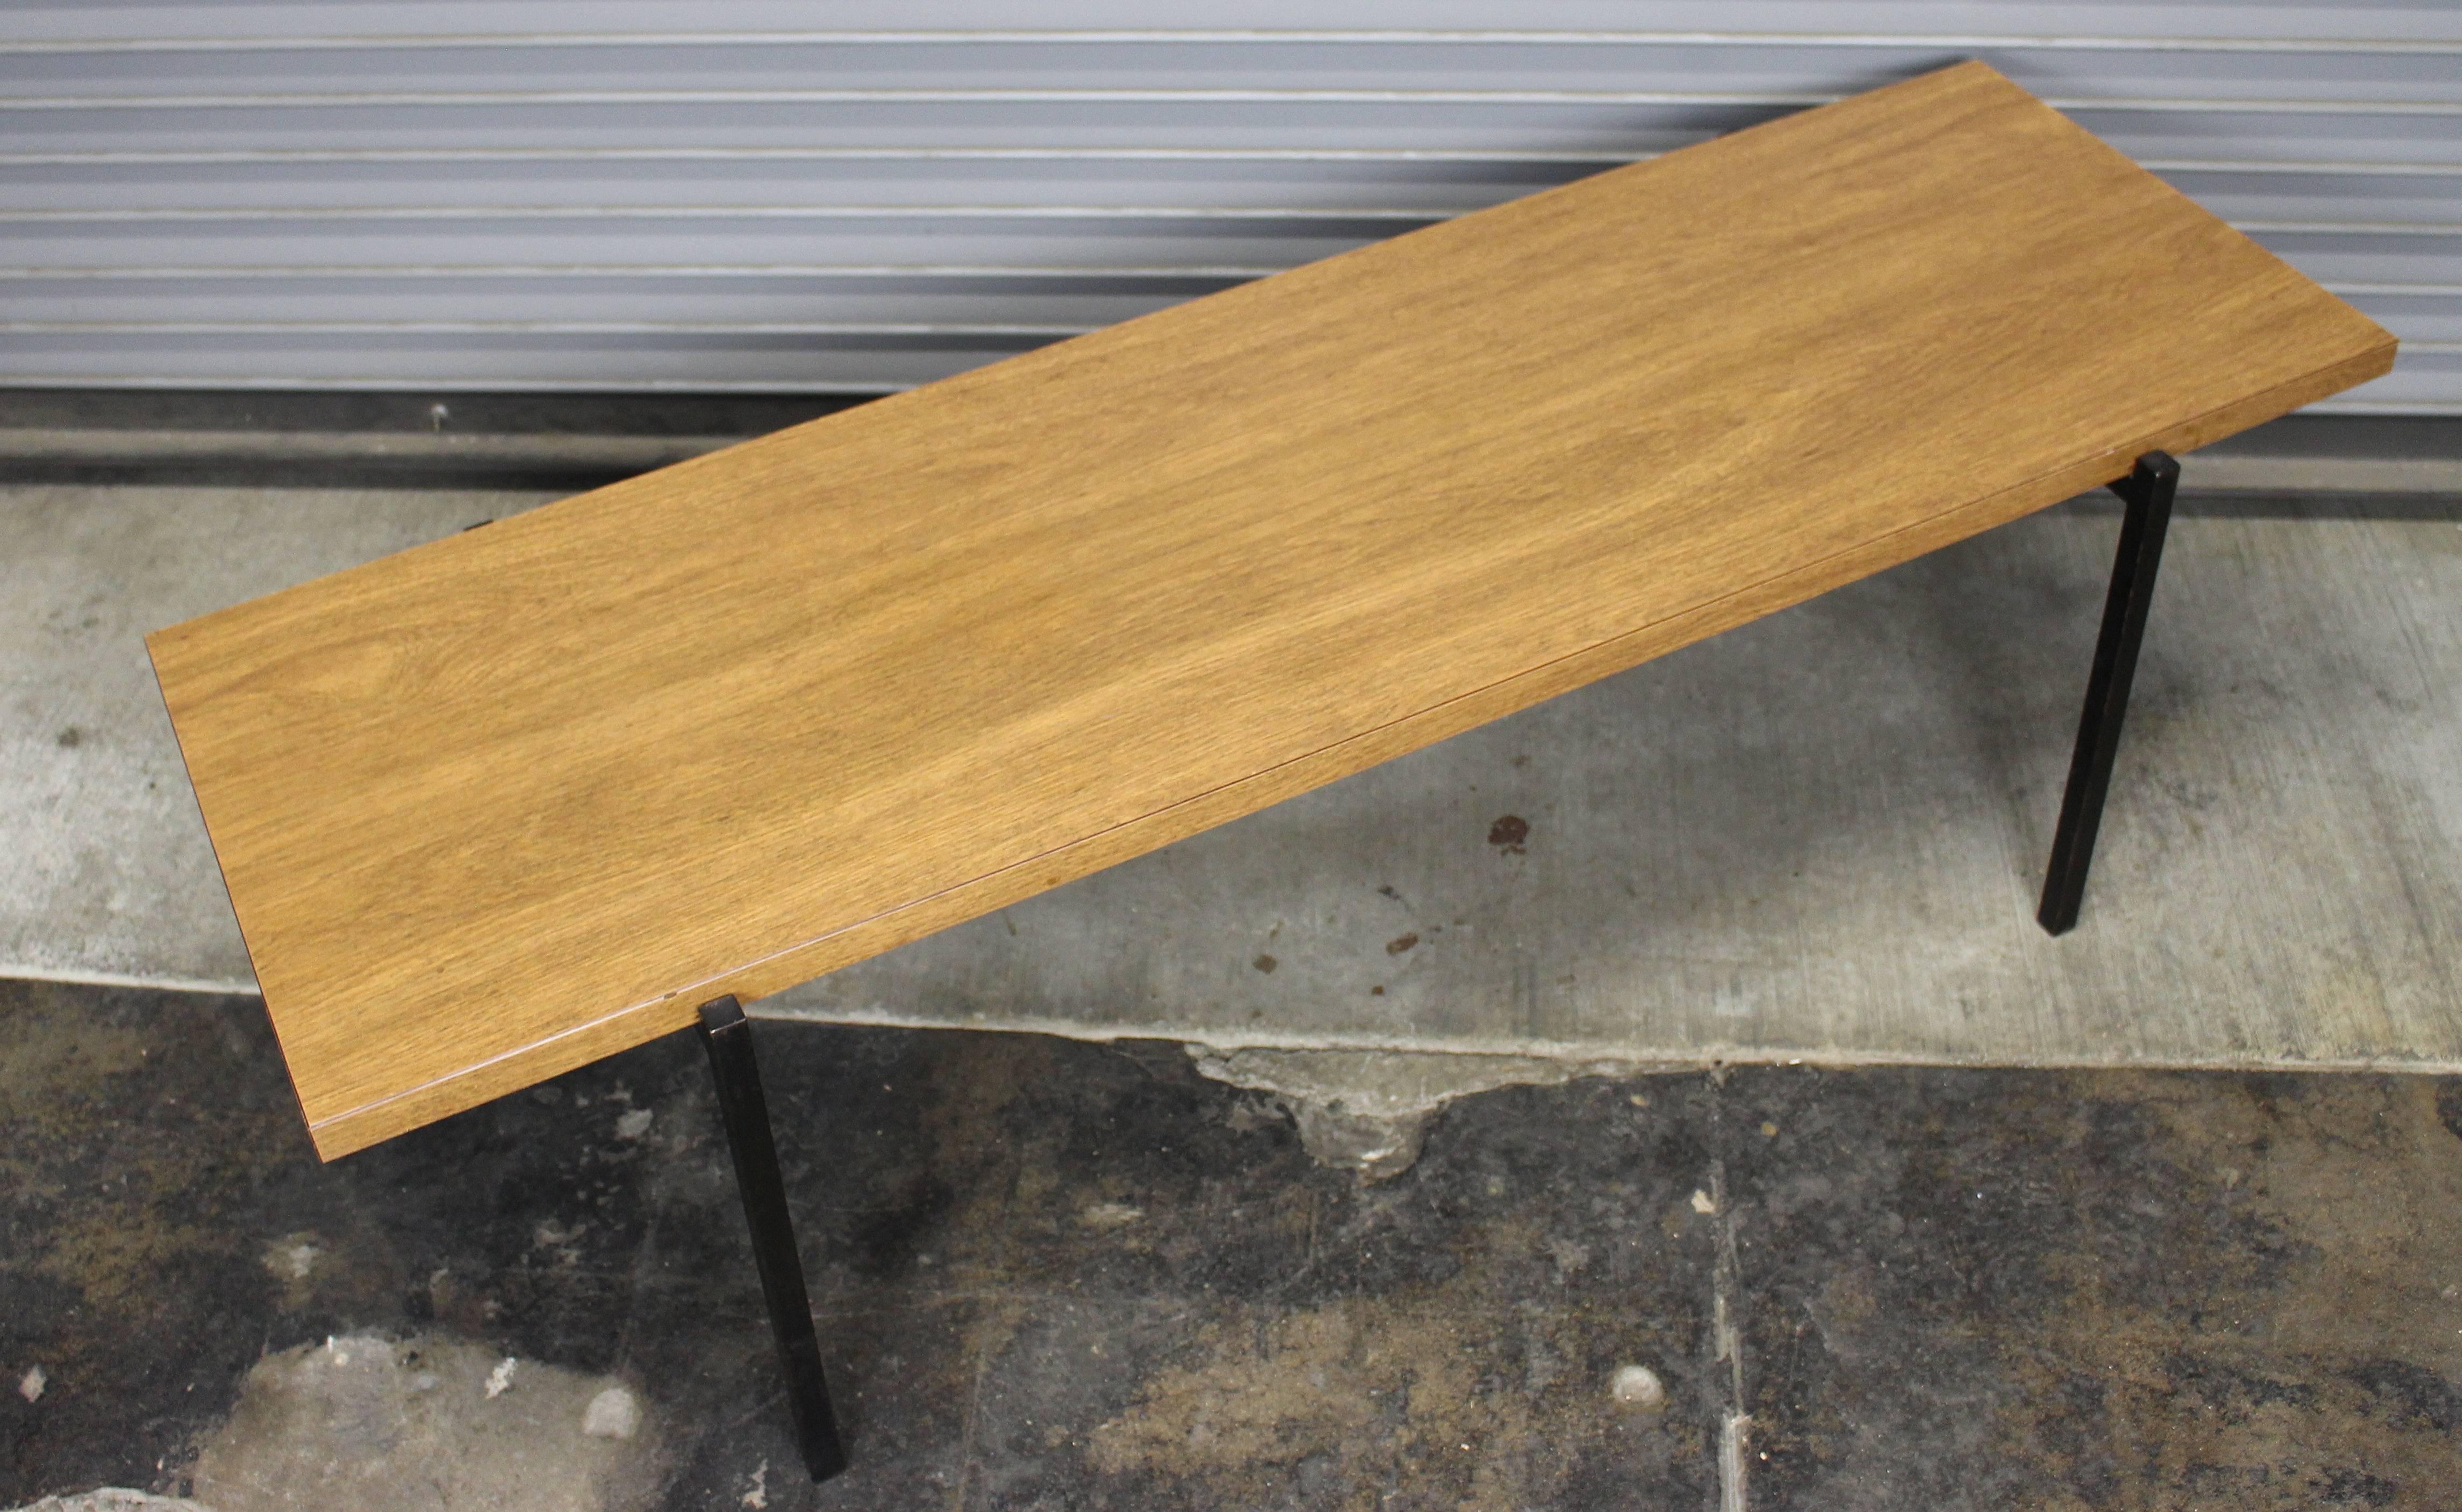 Metal base and wood coffee table.